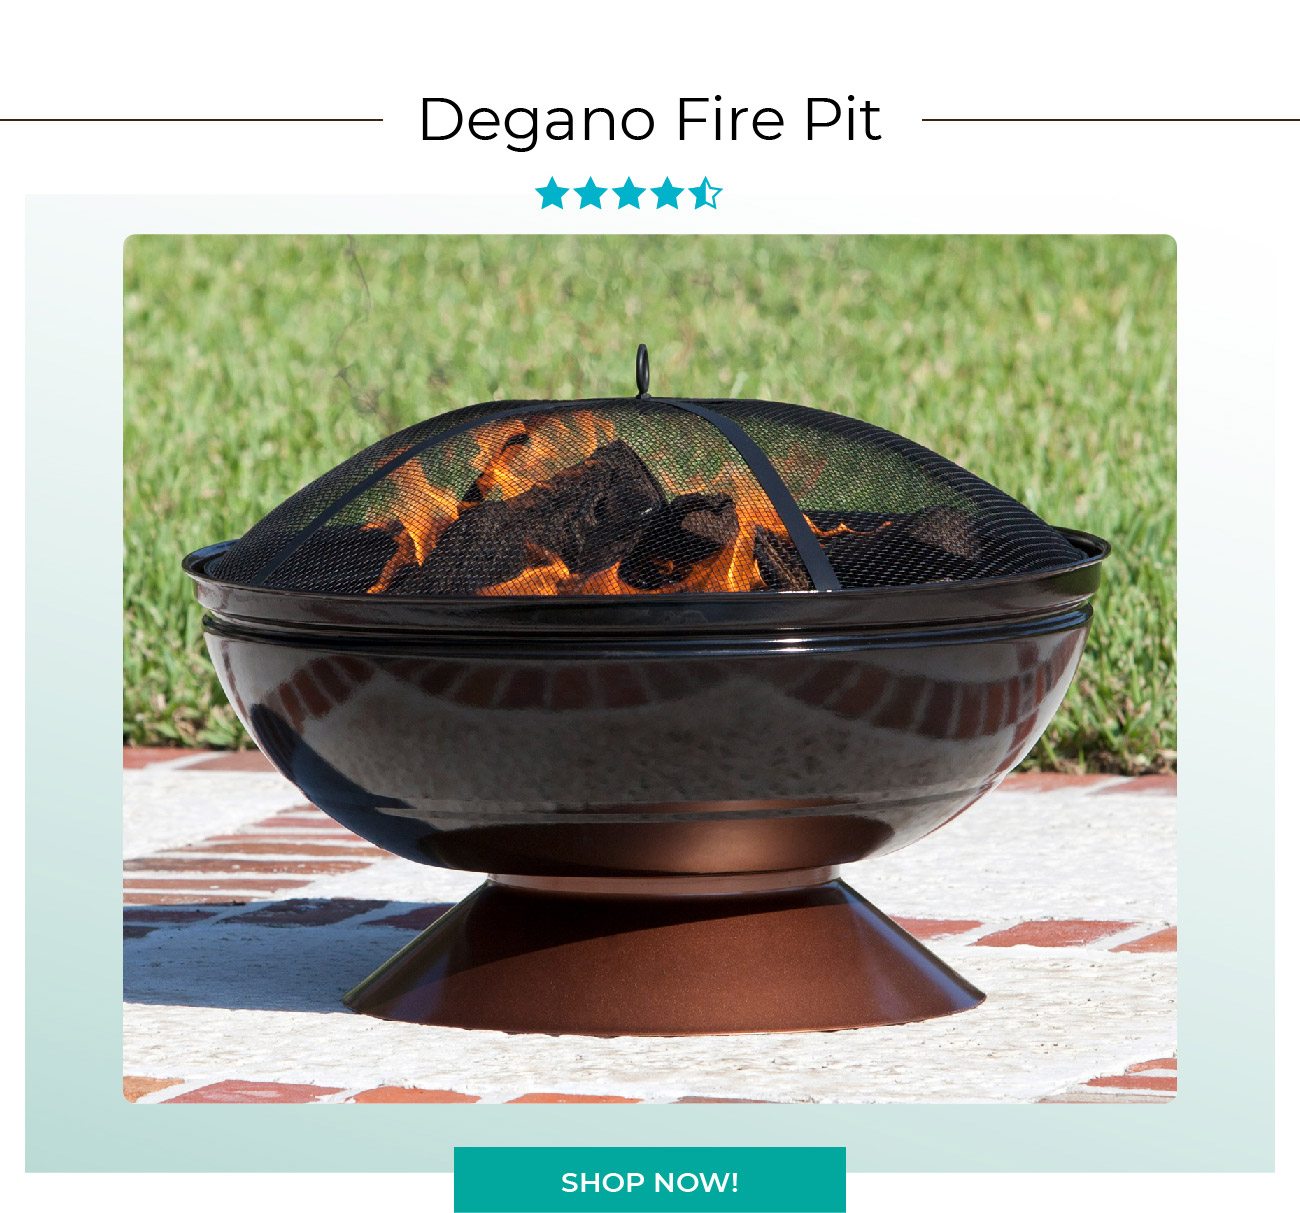 Degano Fire Pit